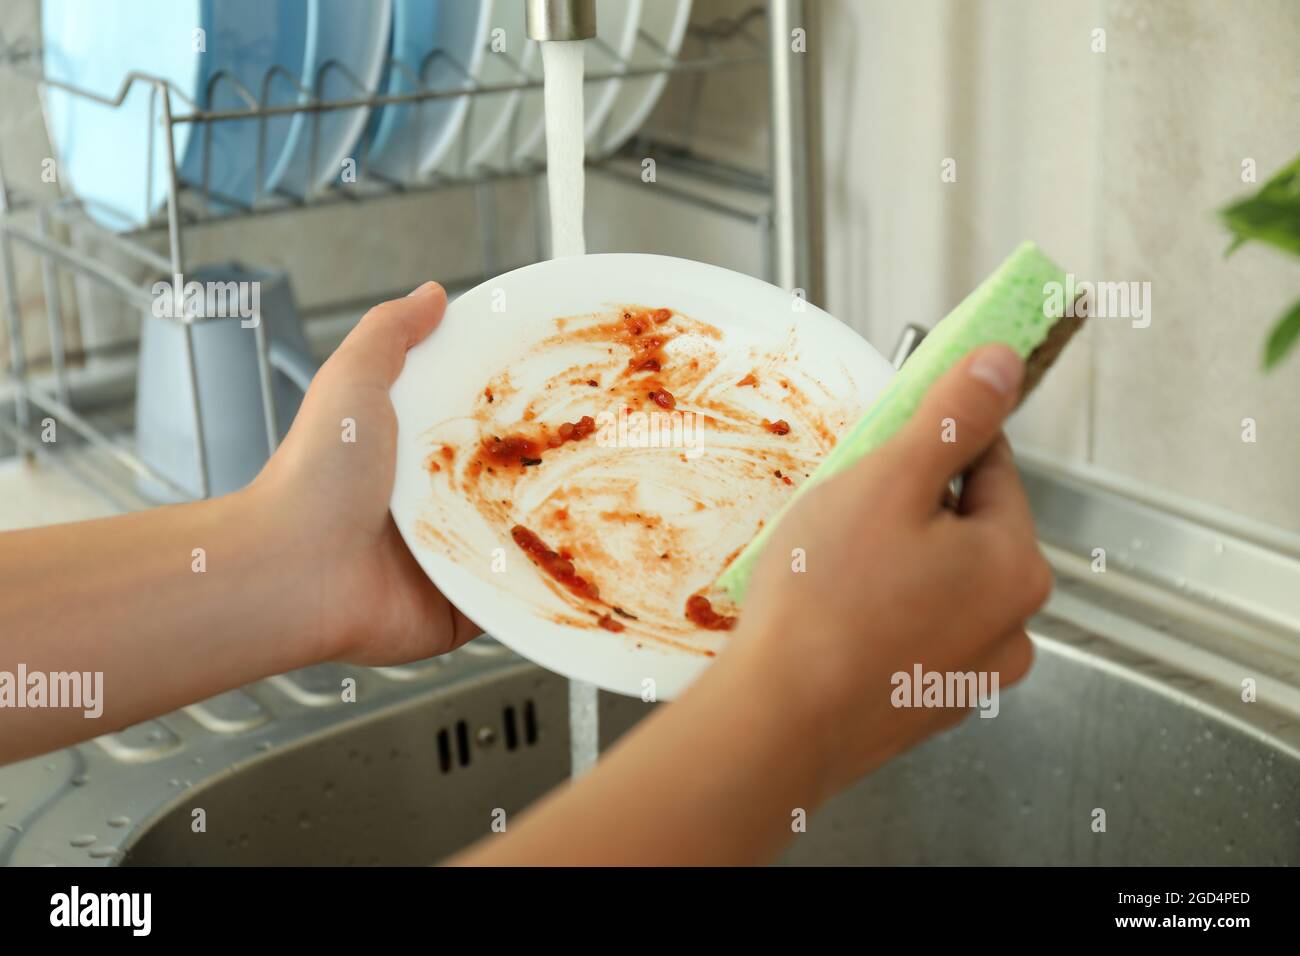 https://c8.alamy.com/comp/2GD4PED/concept-of-dishwashing-on-kitchen-basin-background-2GD4PED.jpg